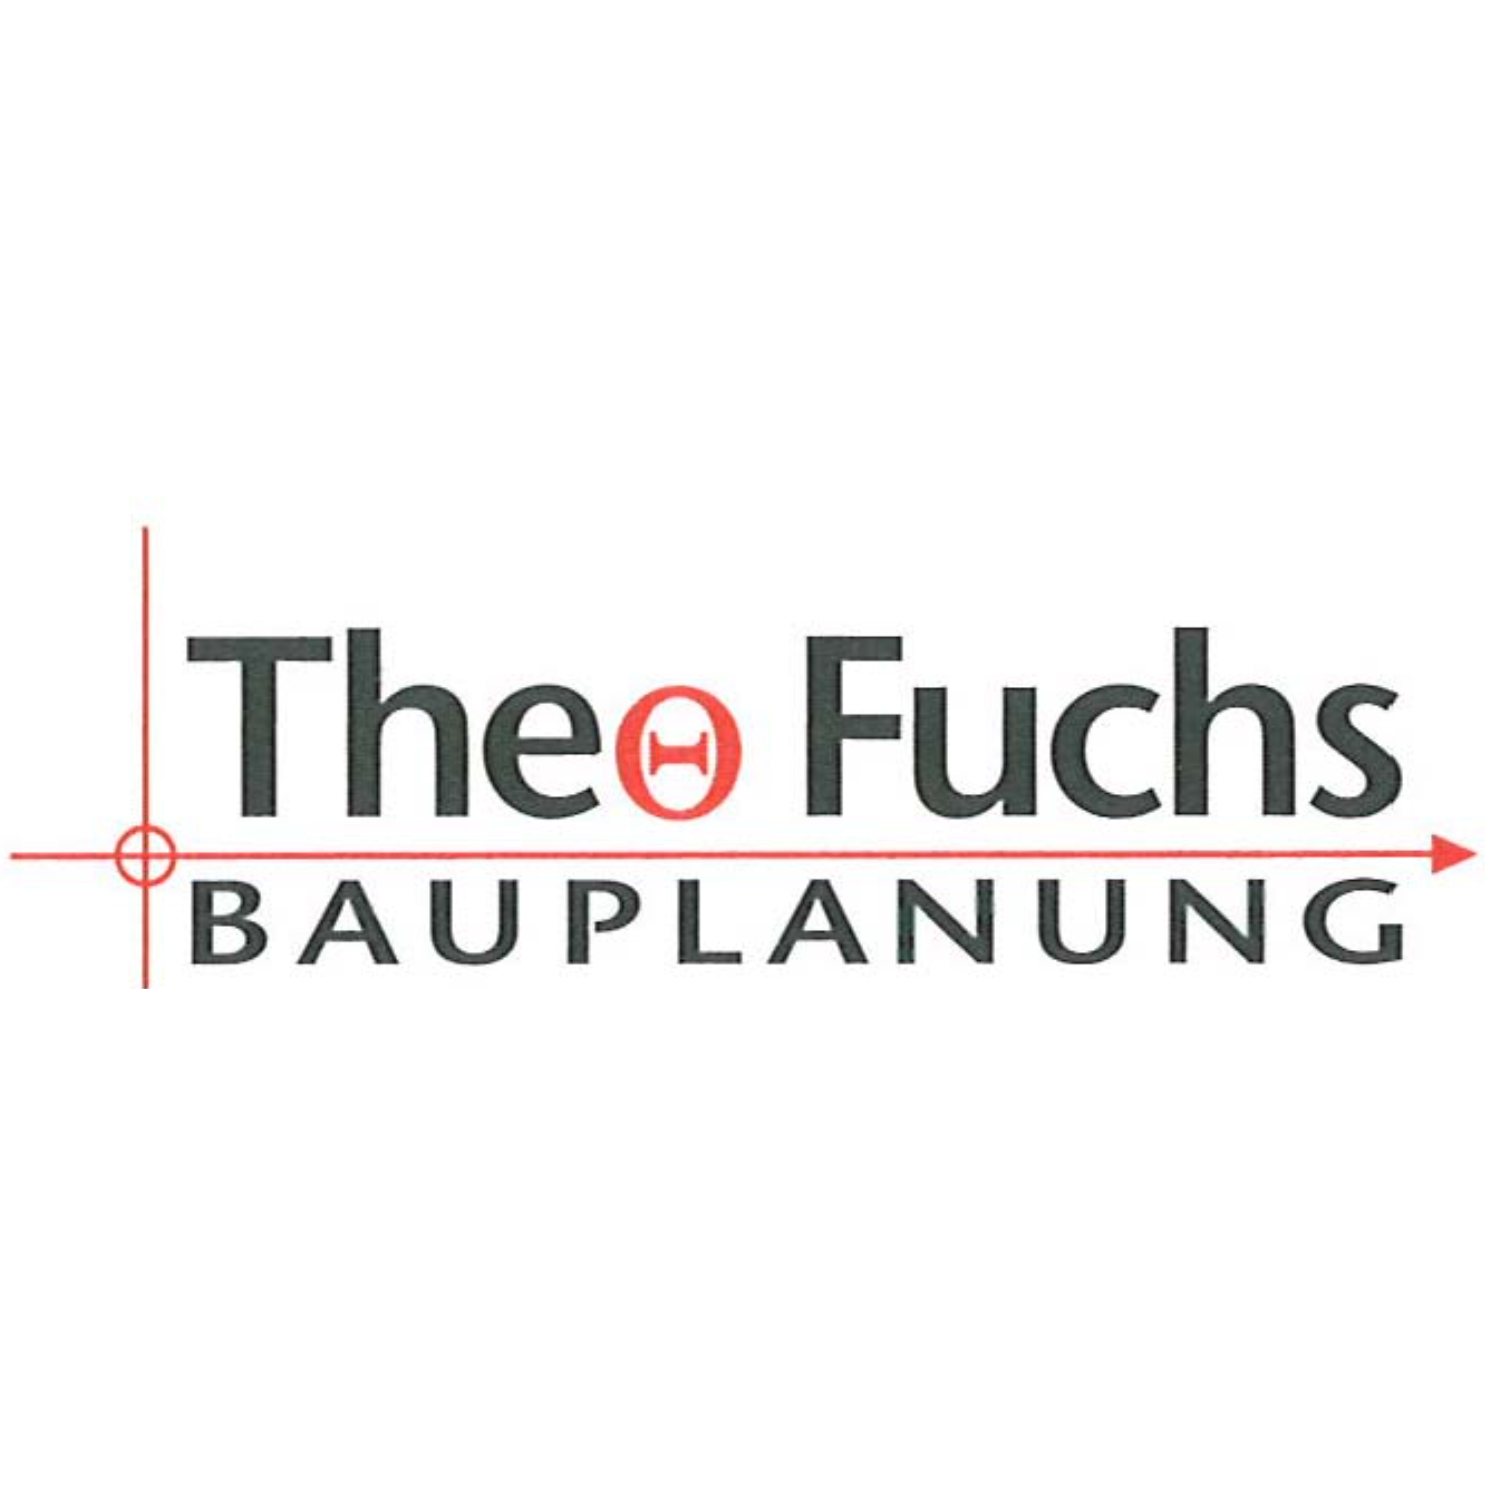 Theo Fuchs Bauplanung in Hersbruck - Logo